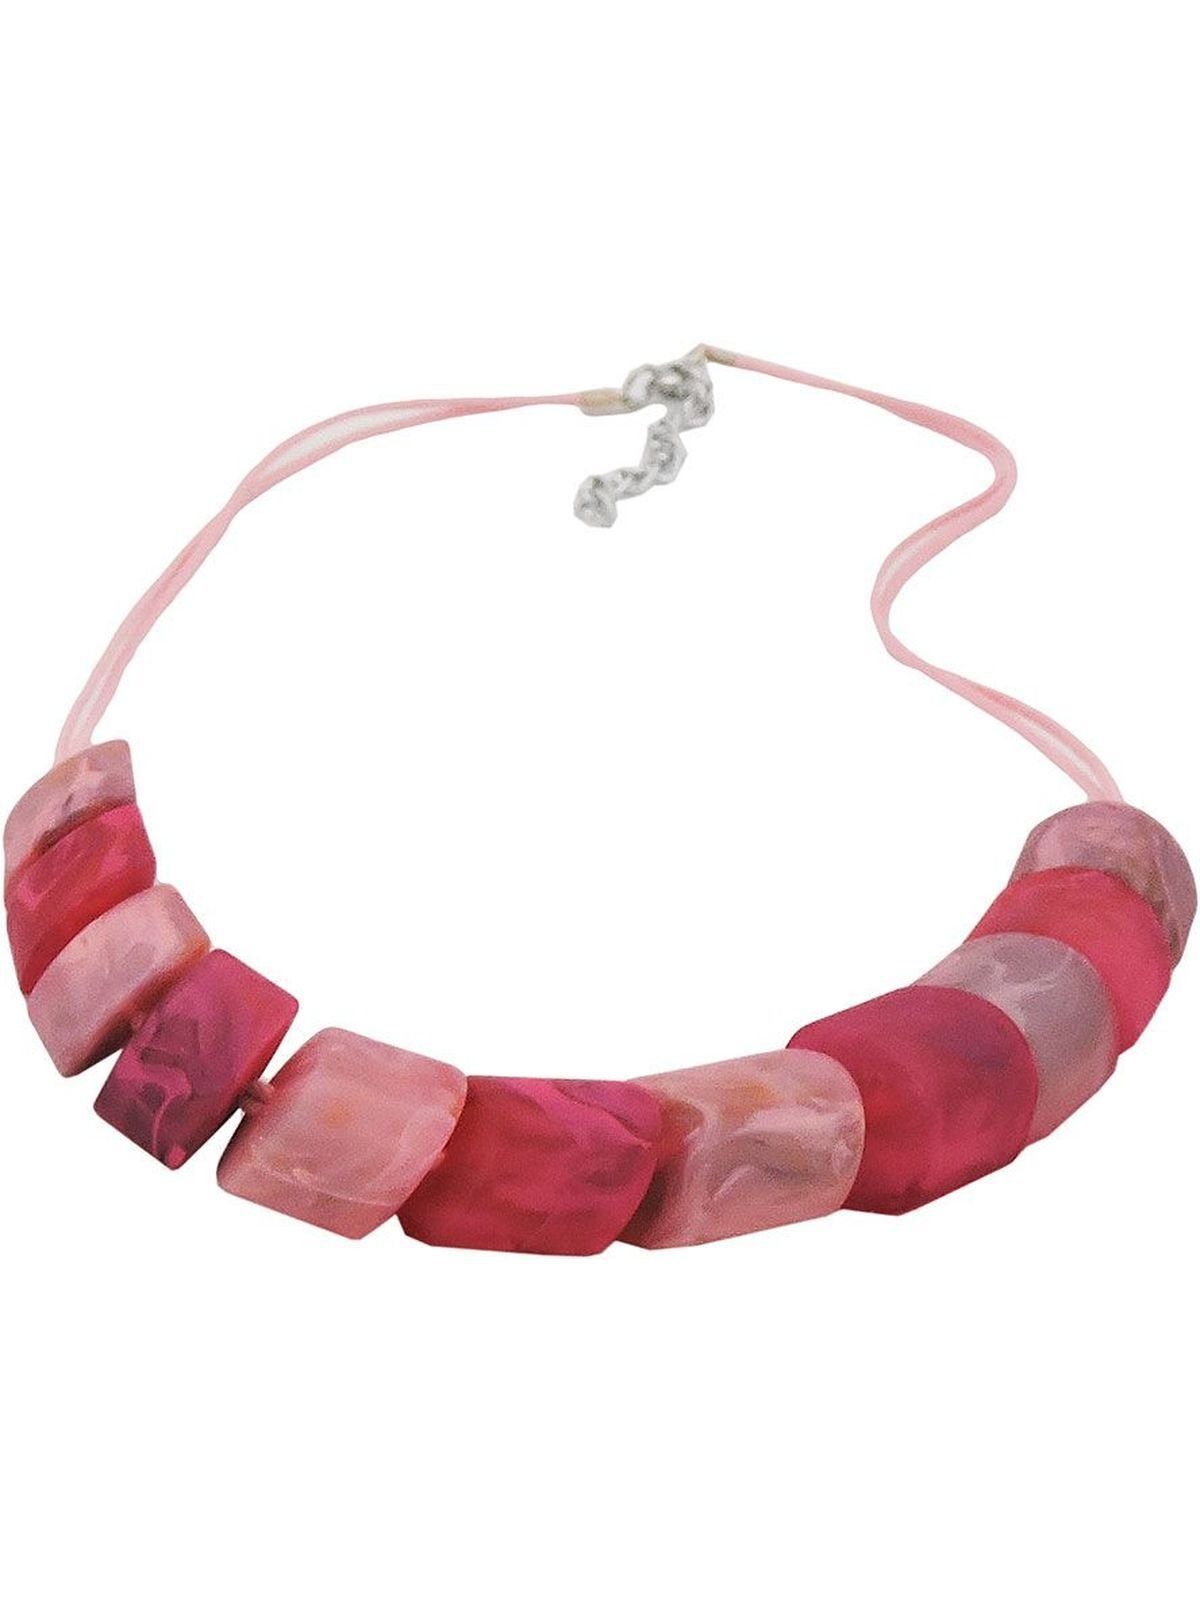 Gallay Perlenkette Schrägperle Kunststoff rosa rosa pink-marmoriert-matt 45cm und (1-tlg) Kordel